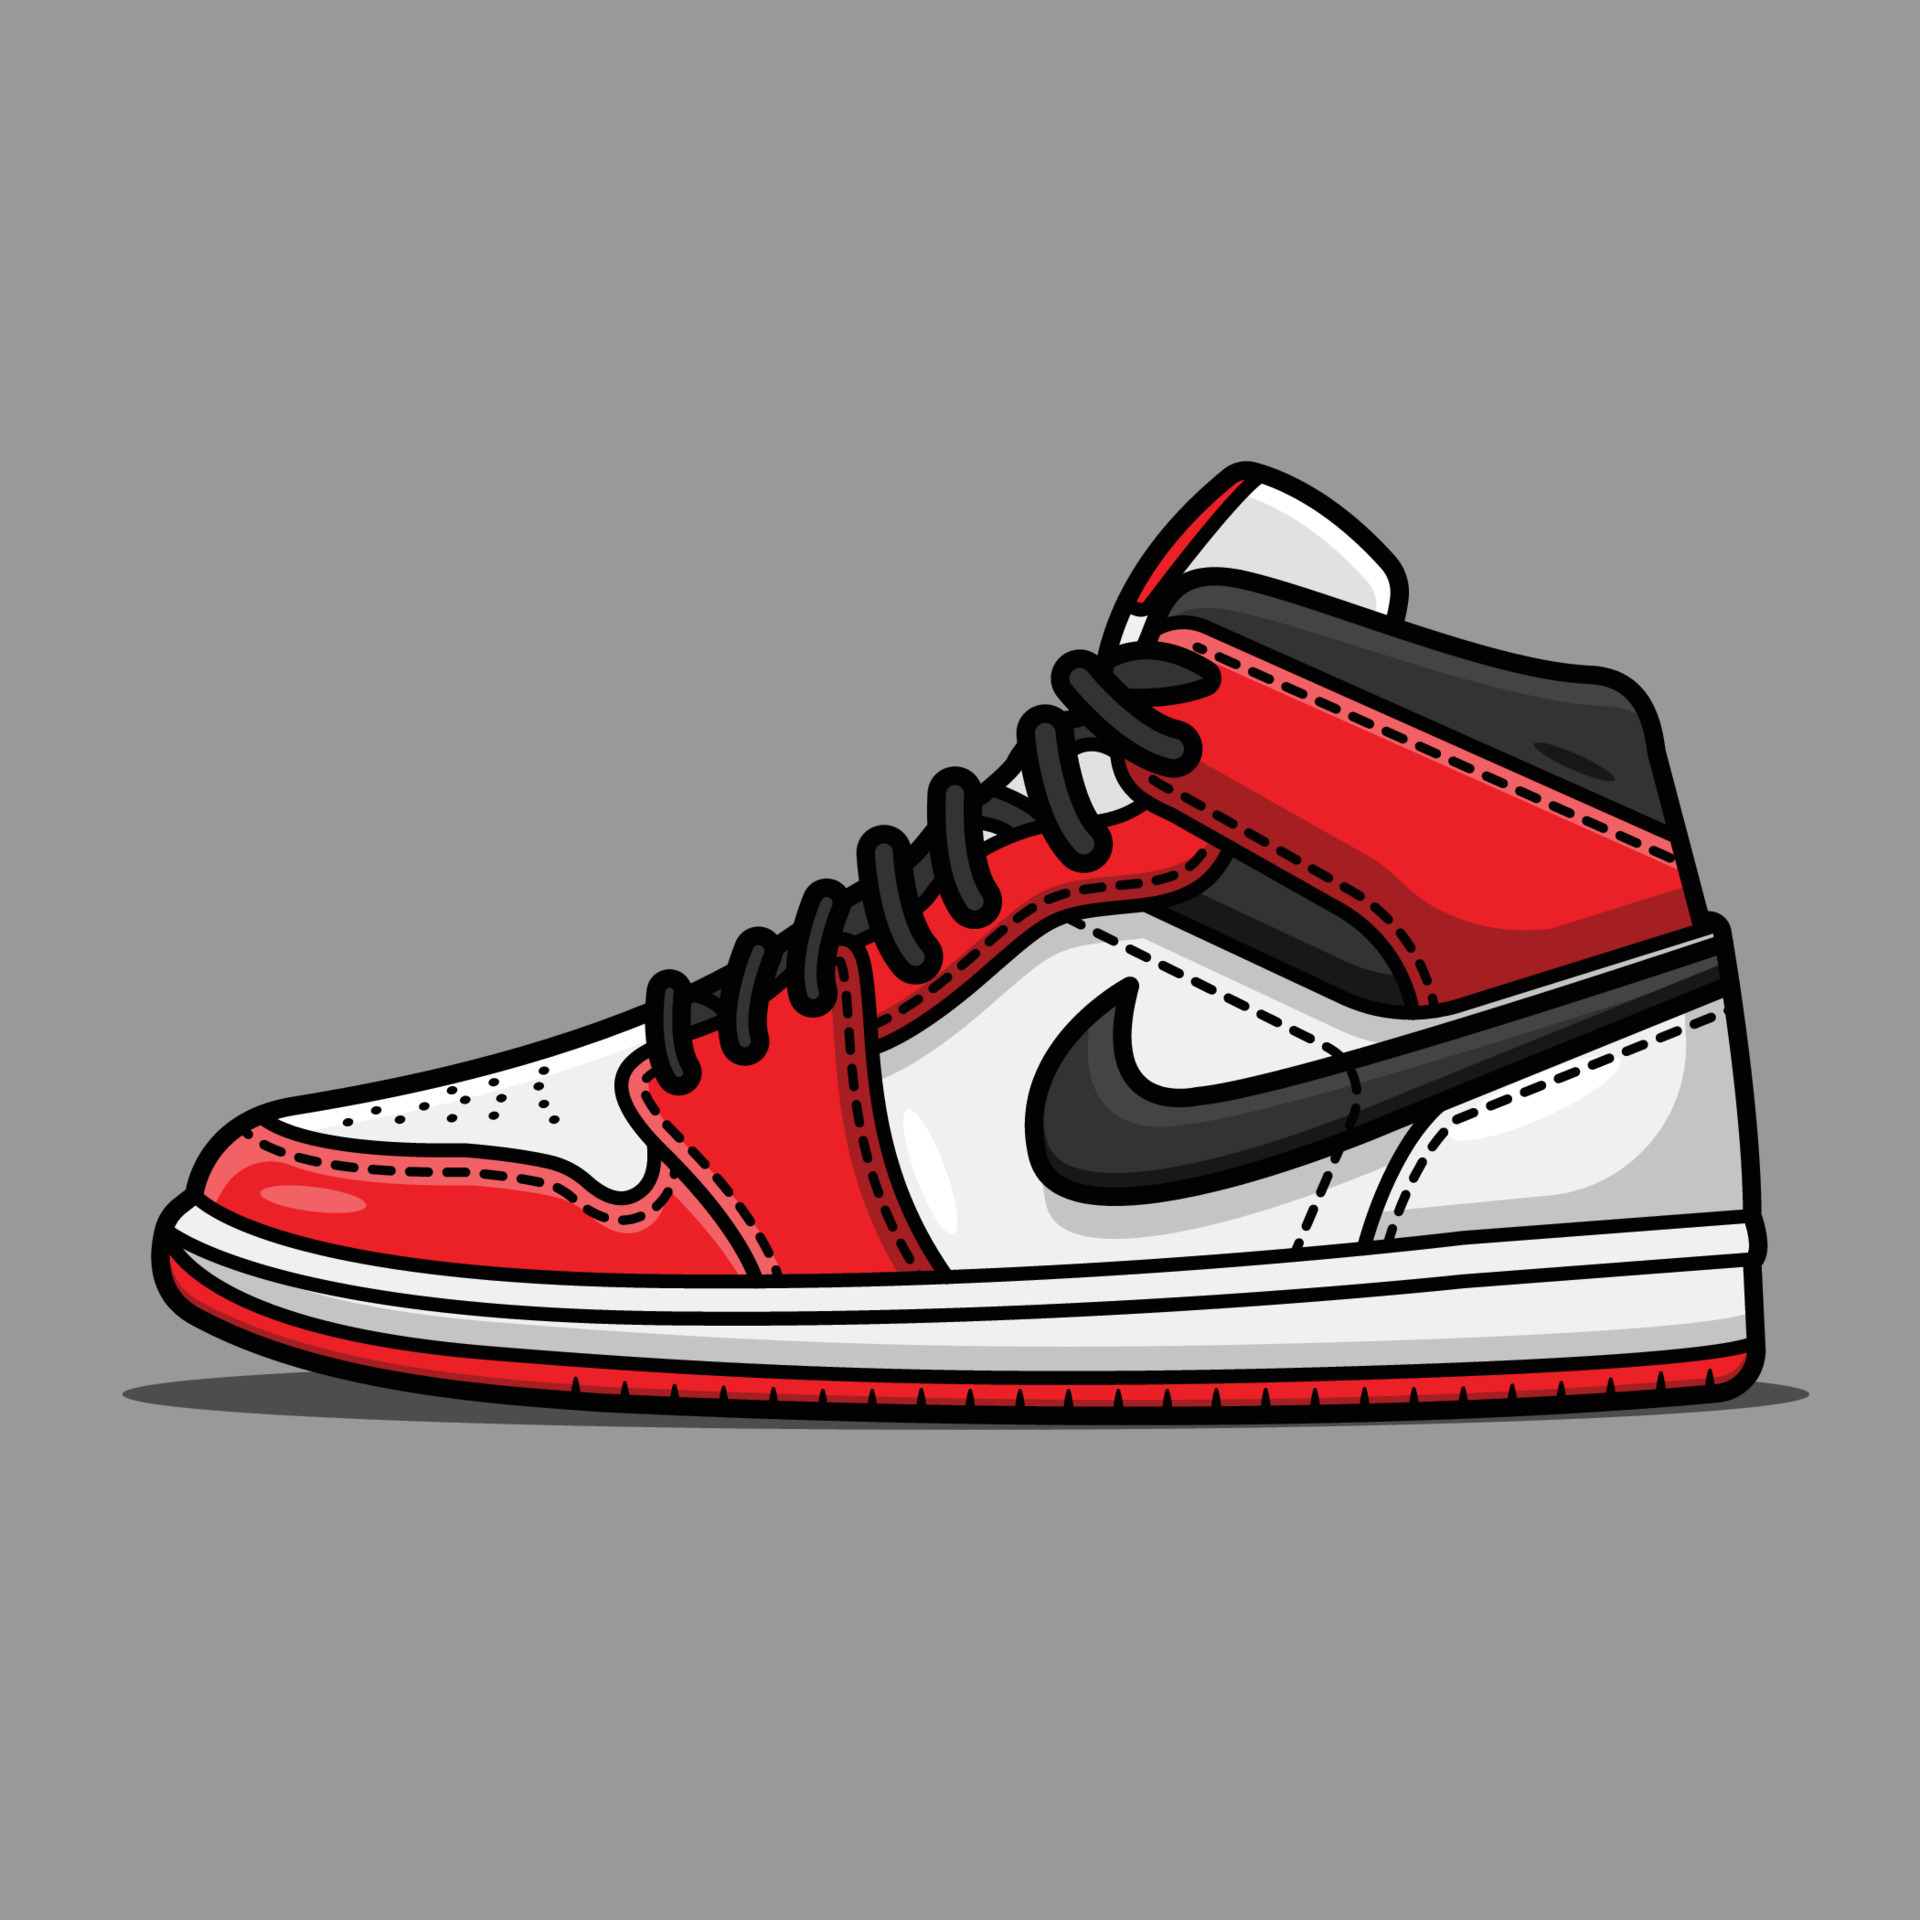 Jordan Sneakers Vector Icons, for Free Download